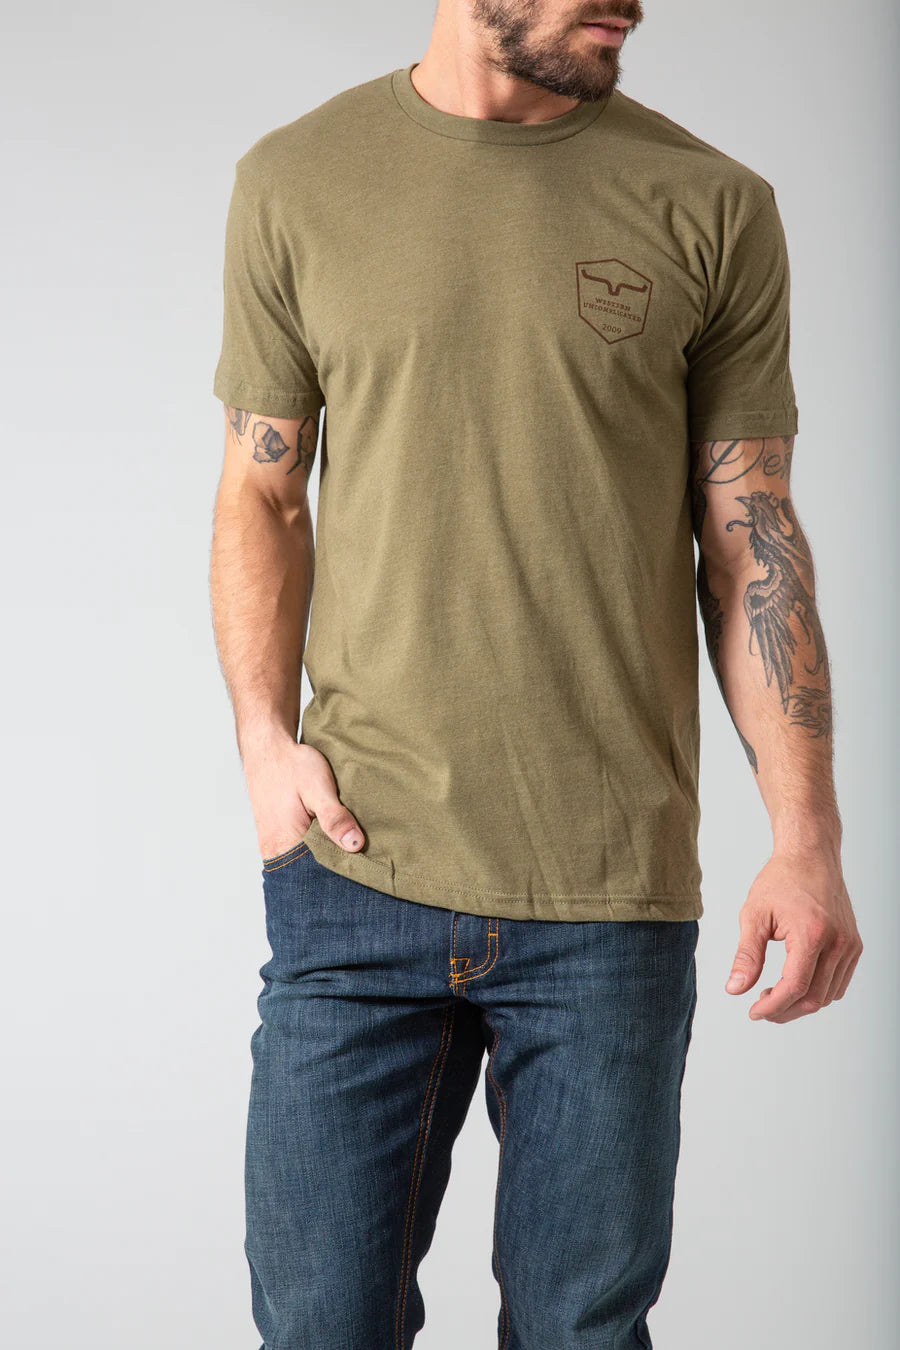 Kimes Ranch Shielded Trucker Army Green Graphic T-Shirt